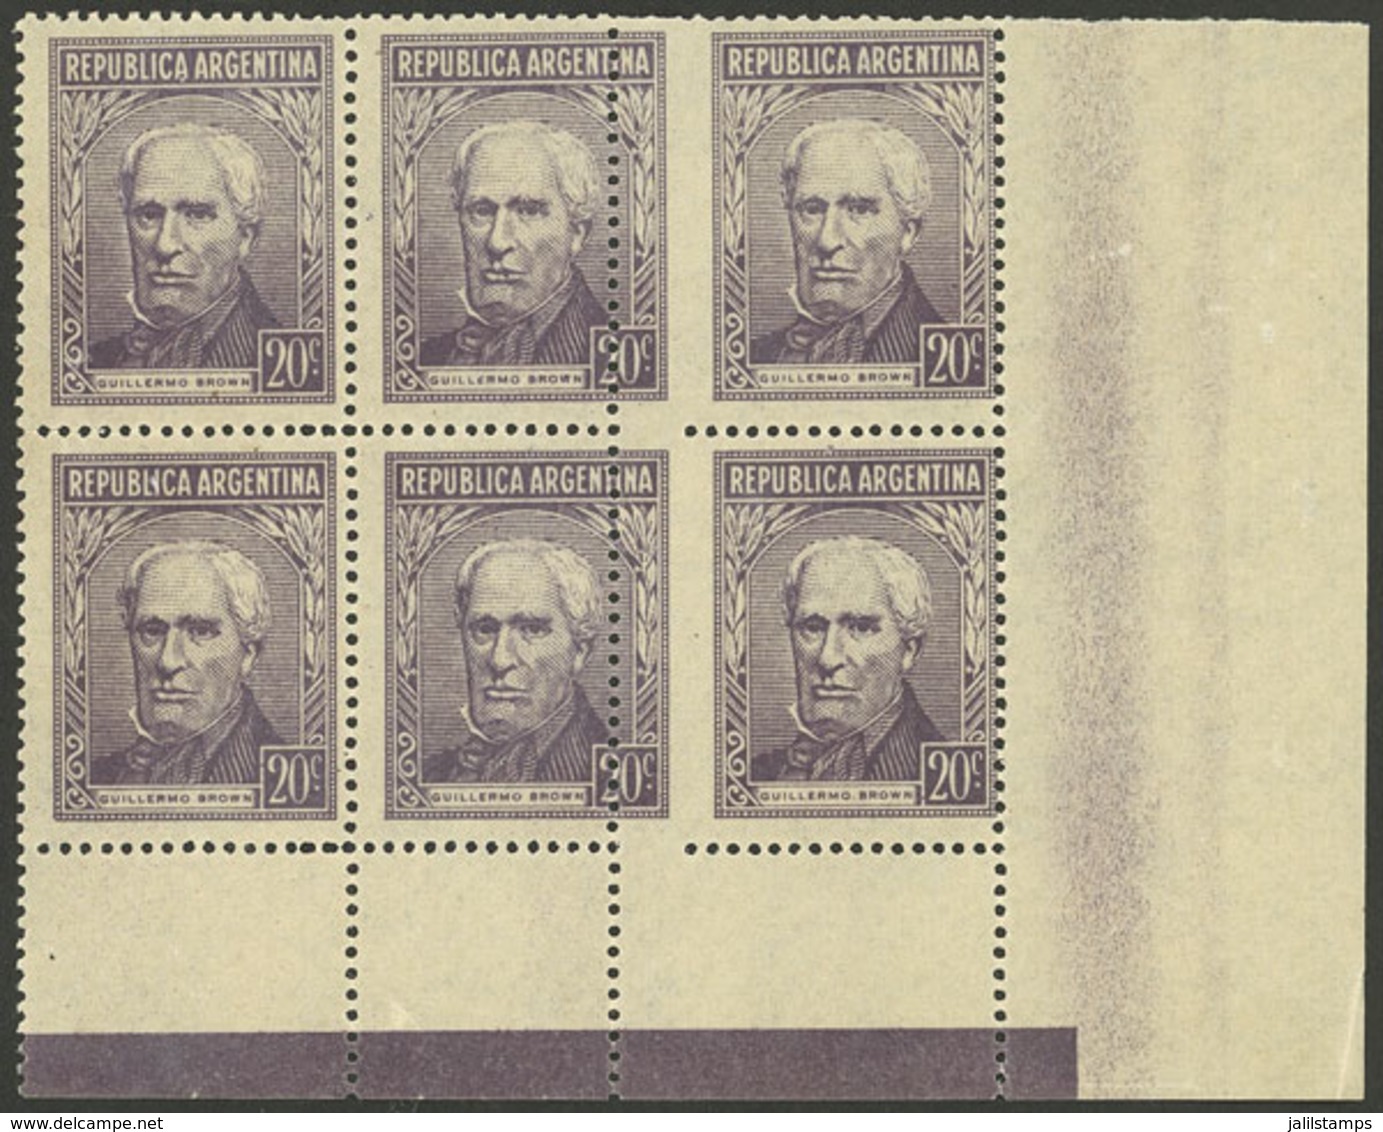 ARGENTINA: GJ.1036, Corner Block Of 6 With Perforation Variety (salto De Peine), Very Notable! - Unused Stamps